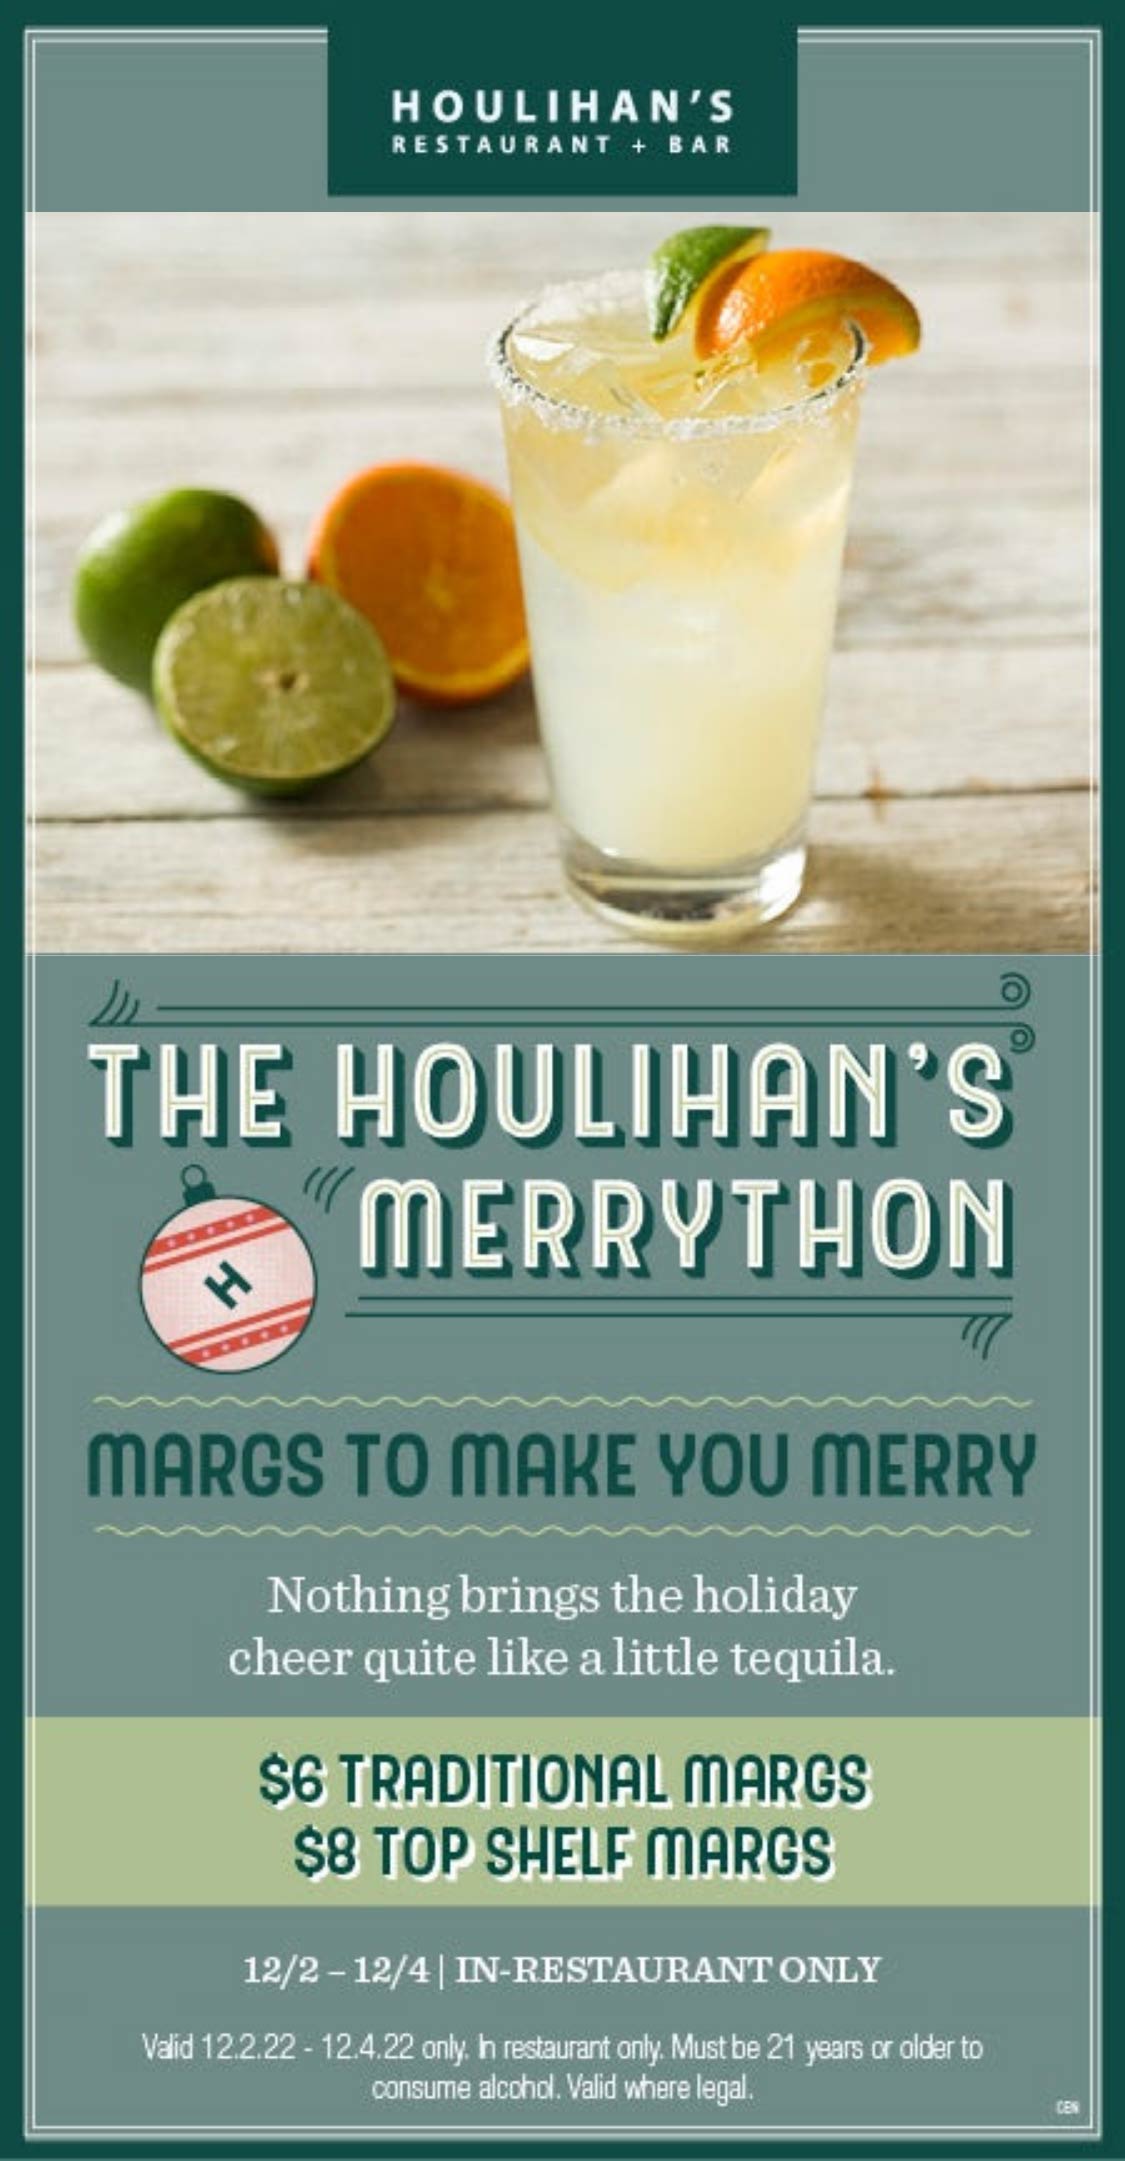 Houlihans restaurants Coupon  $6 margaritas & $8 top shelf at Houlihans restaurants #houlihans 